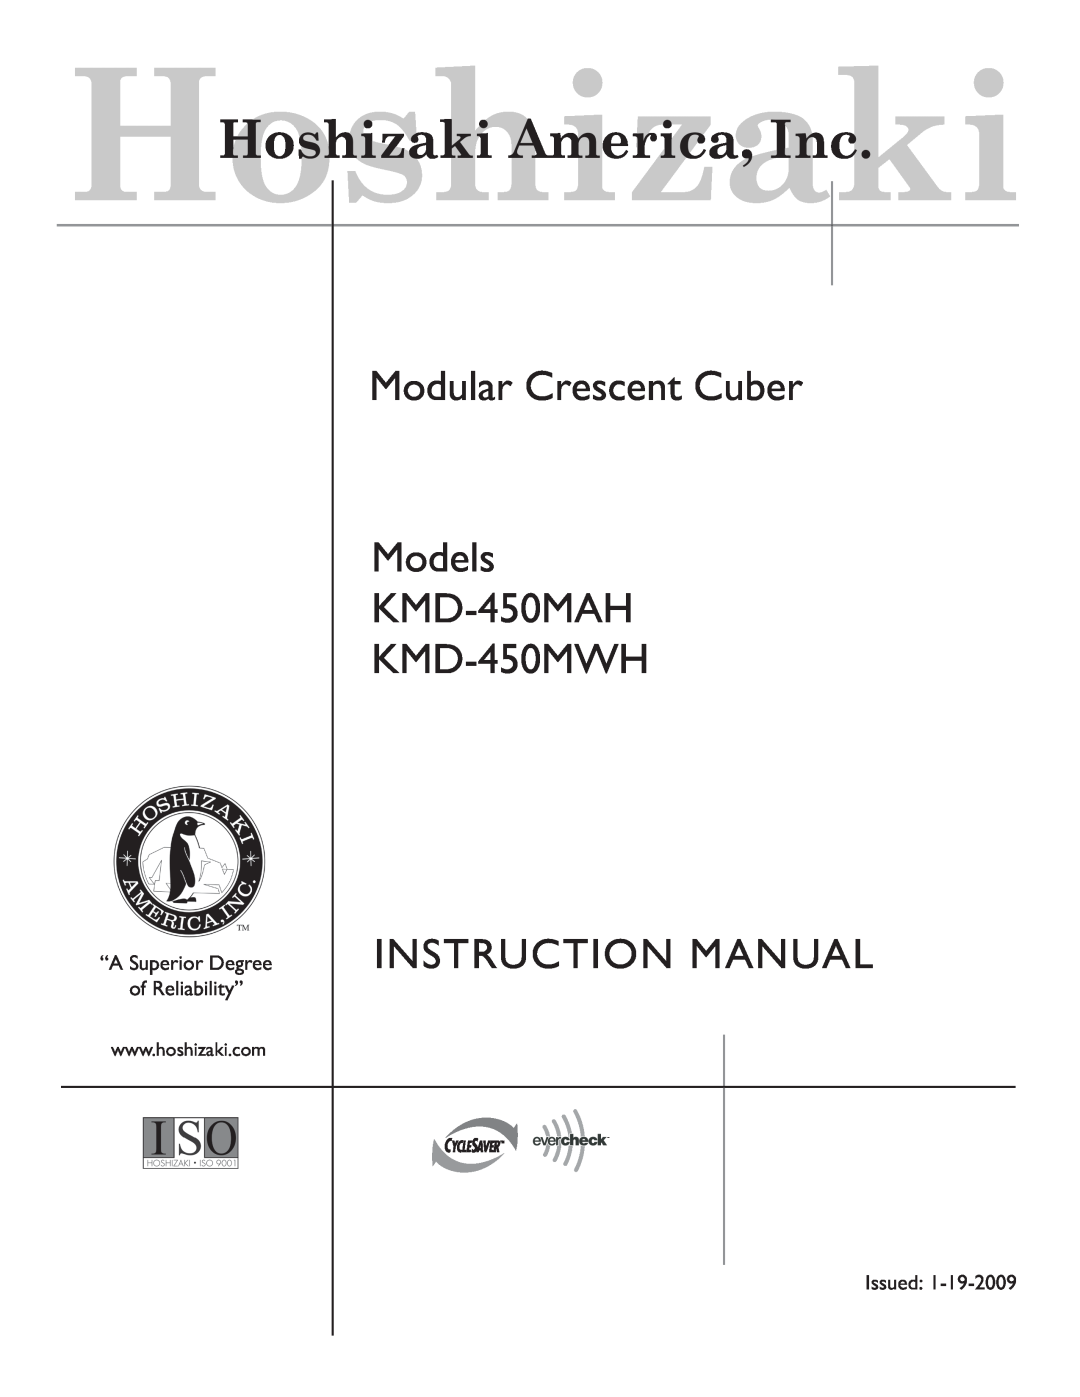 Hoshizaki instruction manual Modular Crescent Cuber Models KMD-450MAH KMD-450MWH, HoshizakiHoshizaki America, Inc 